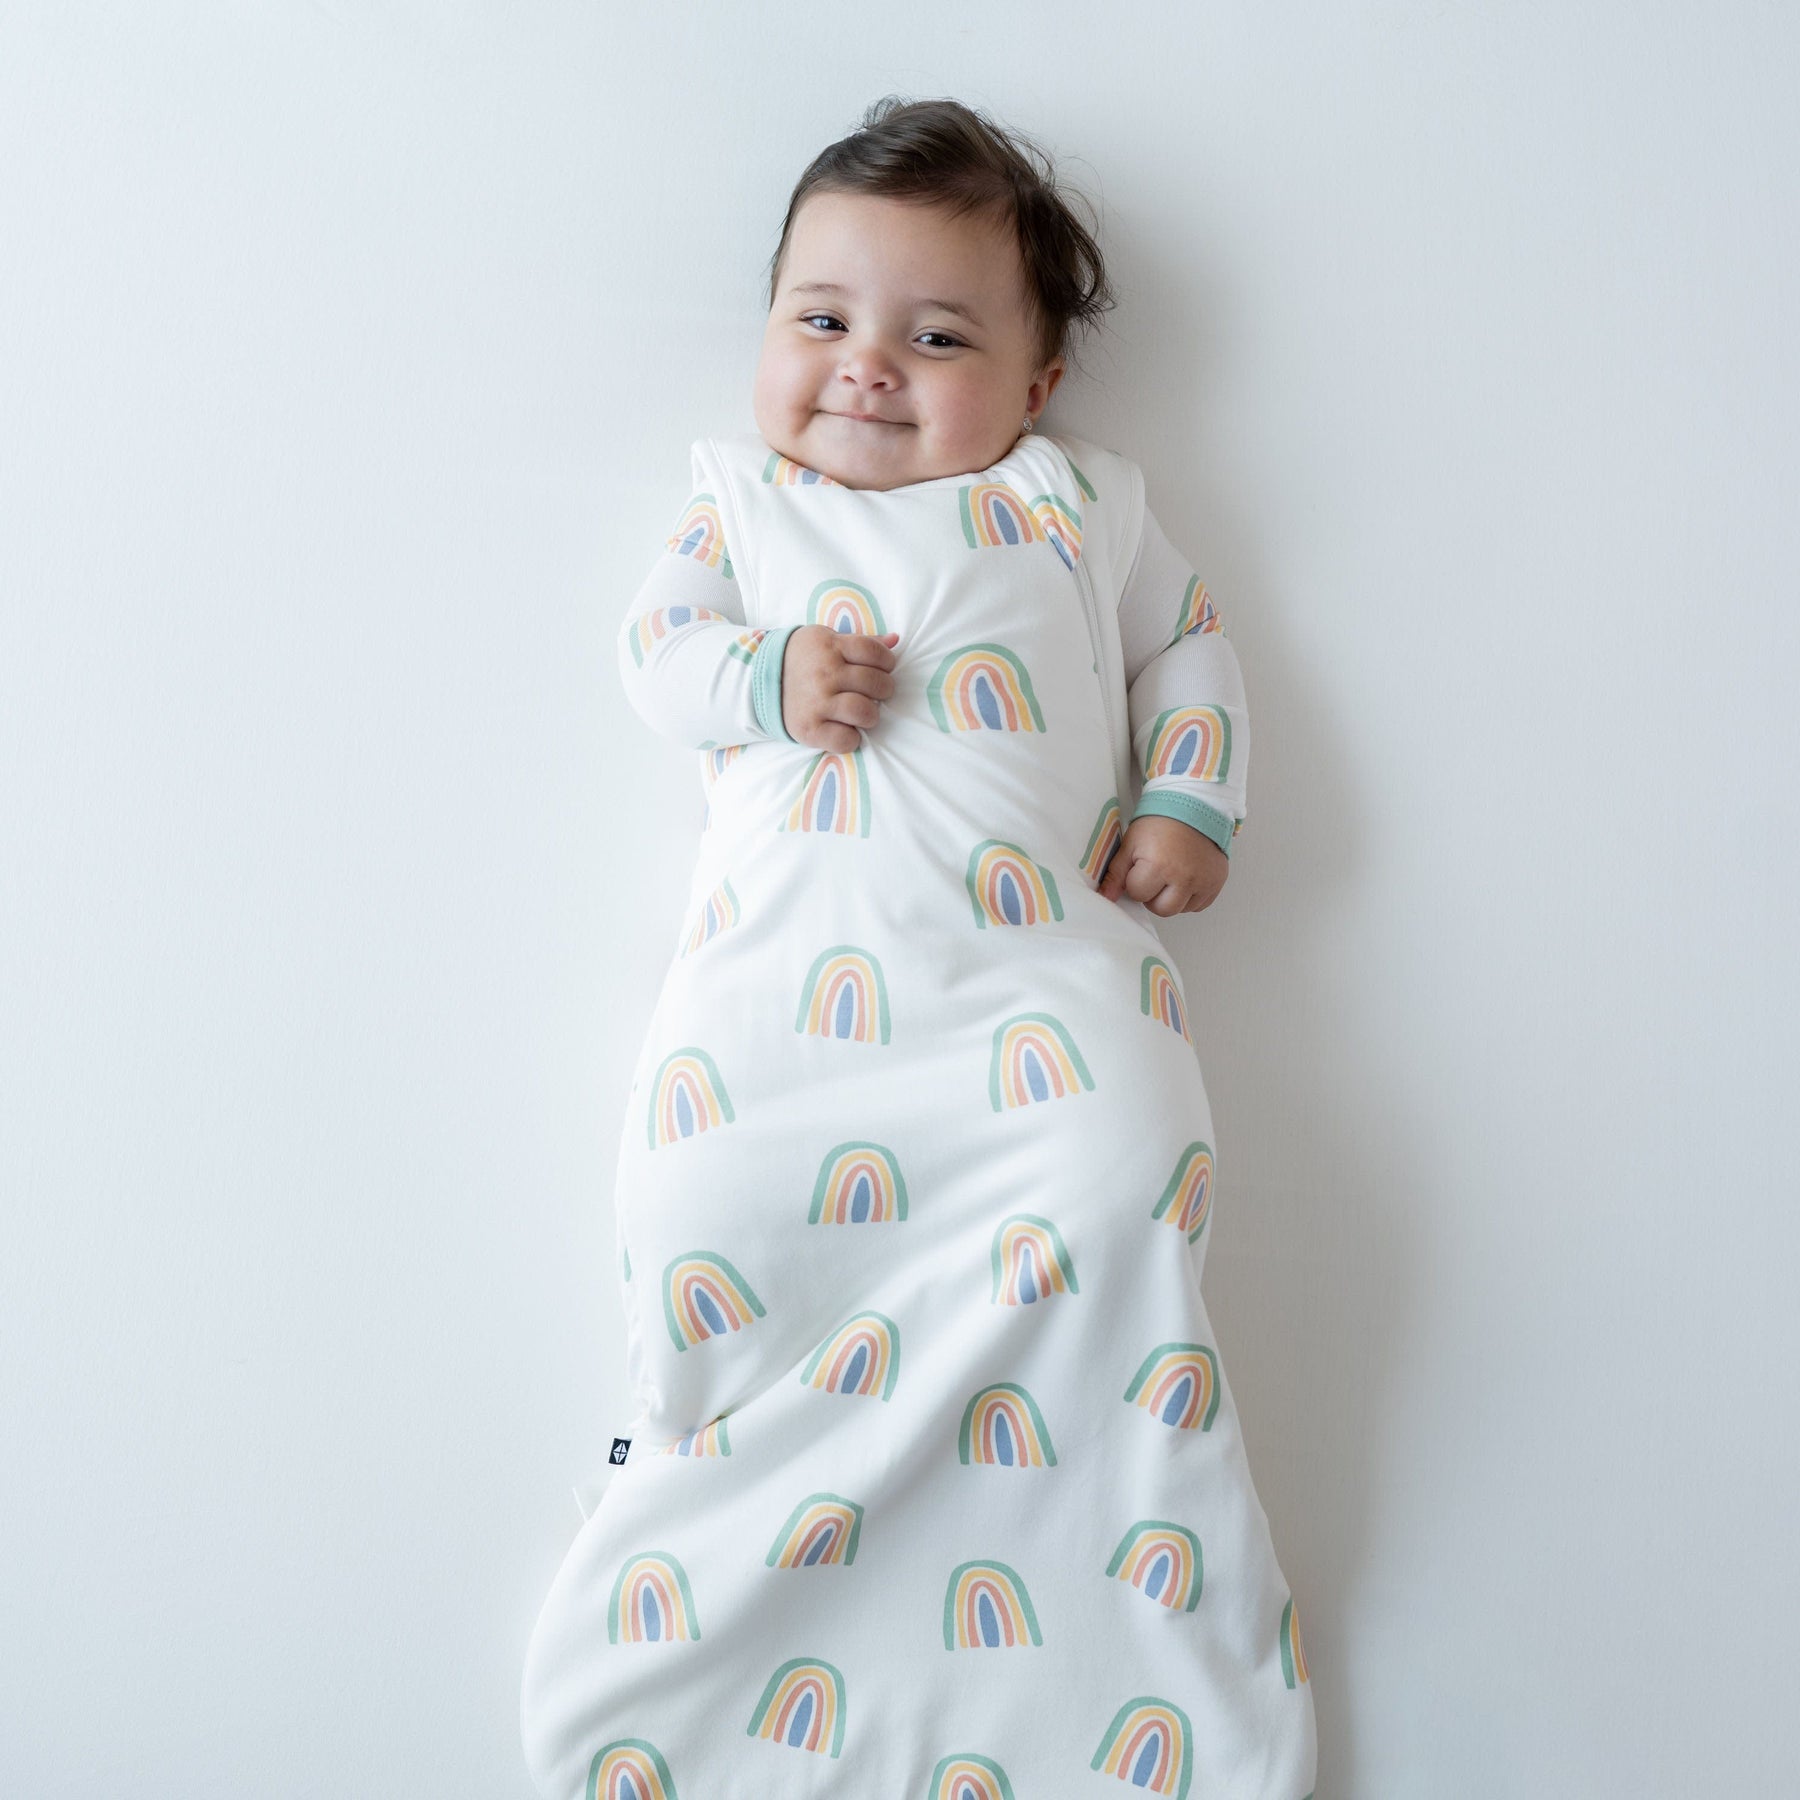 Infant wearing Kyte Baby Sleep Bag TOG 1.0 in Wasabi Rainbow pattern